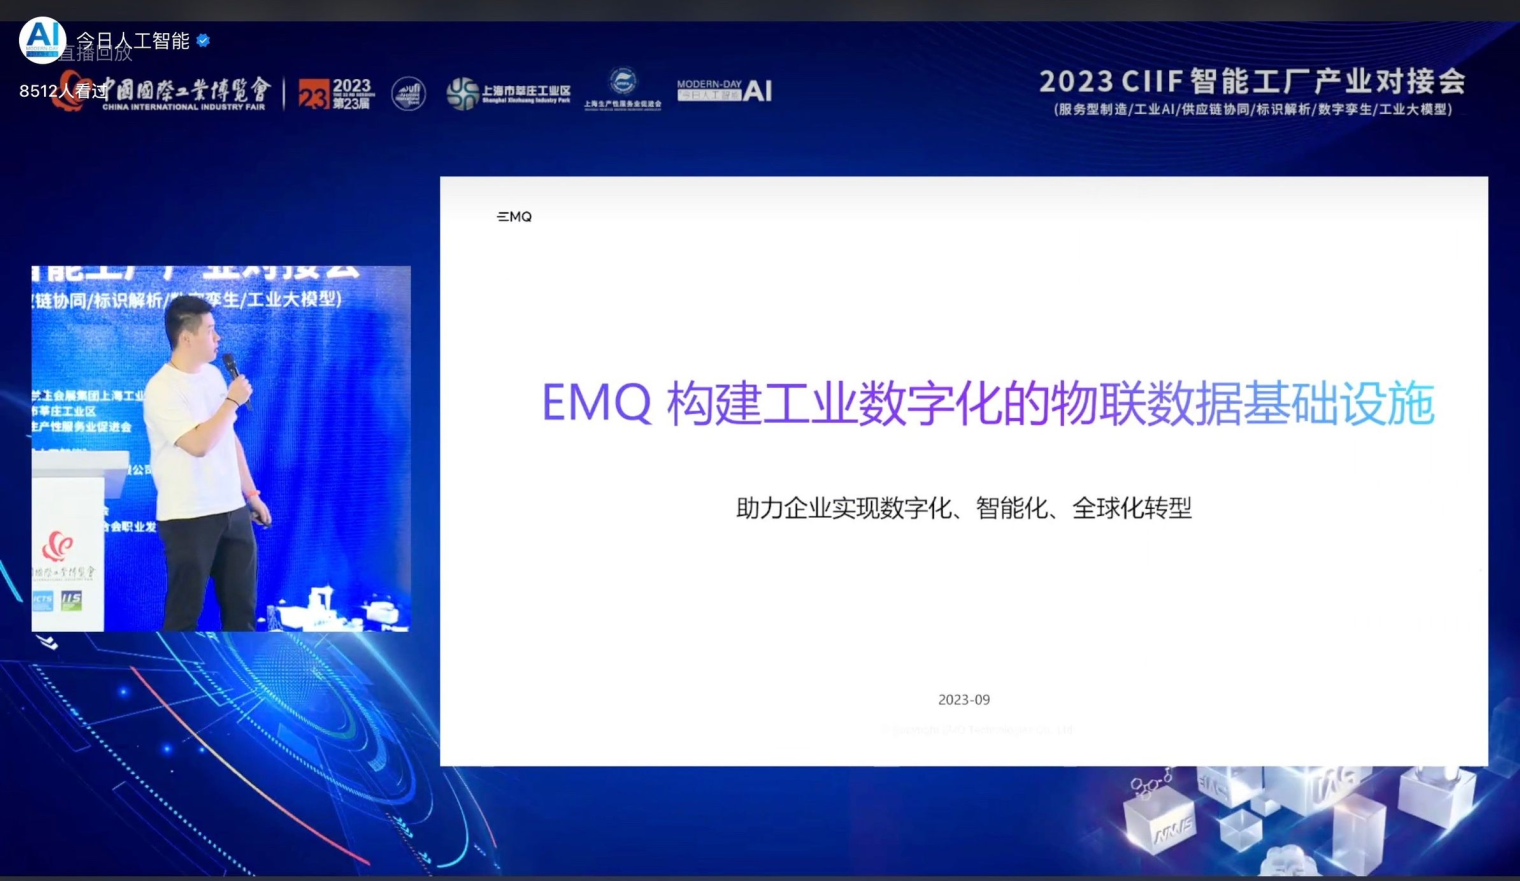 EMQ 解决方案架构师魏艺乔在工博会分享工业解决方案